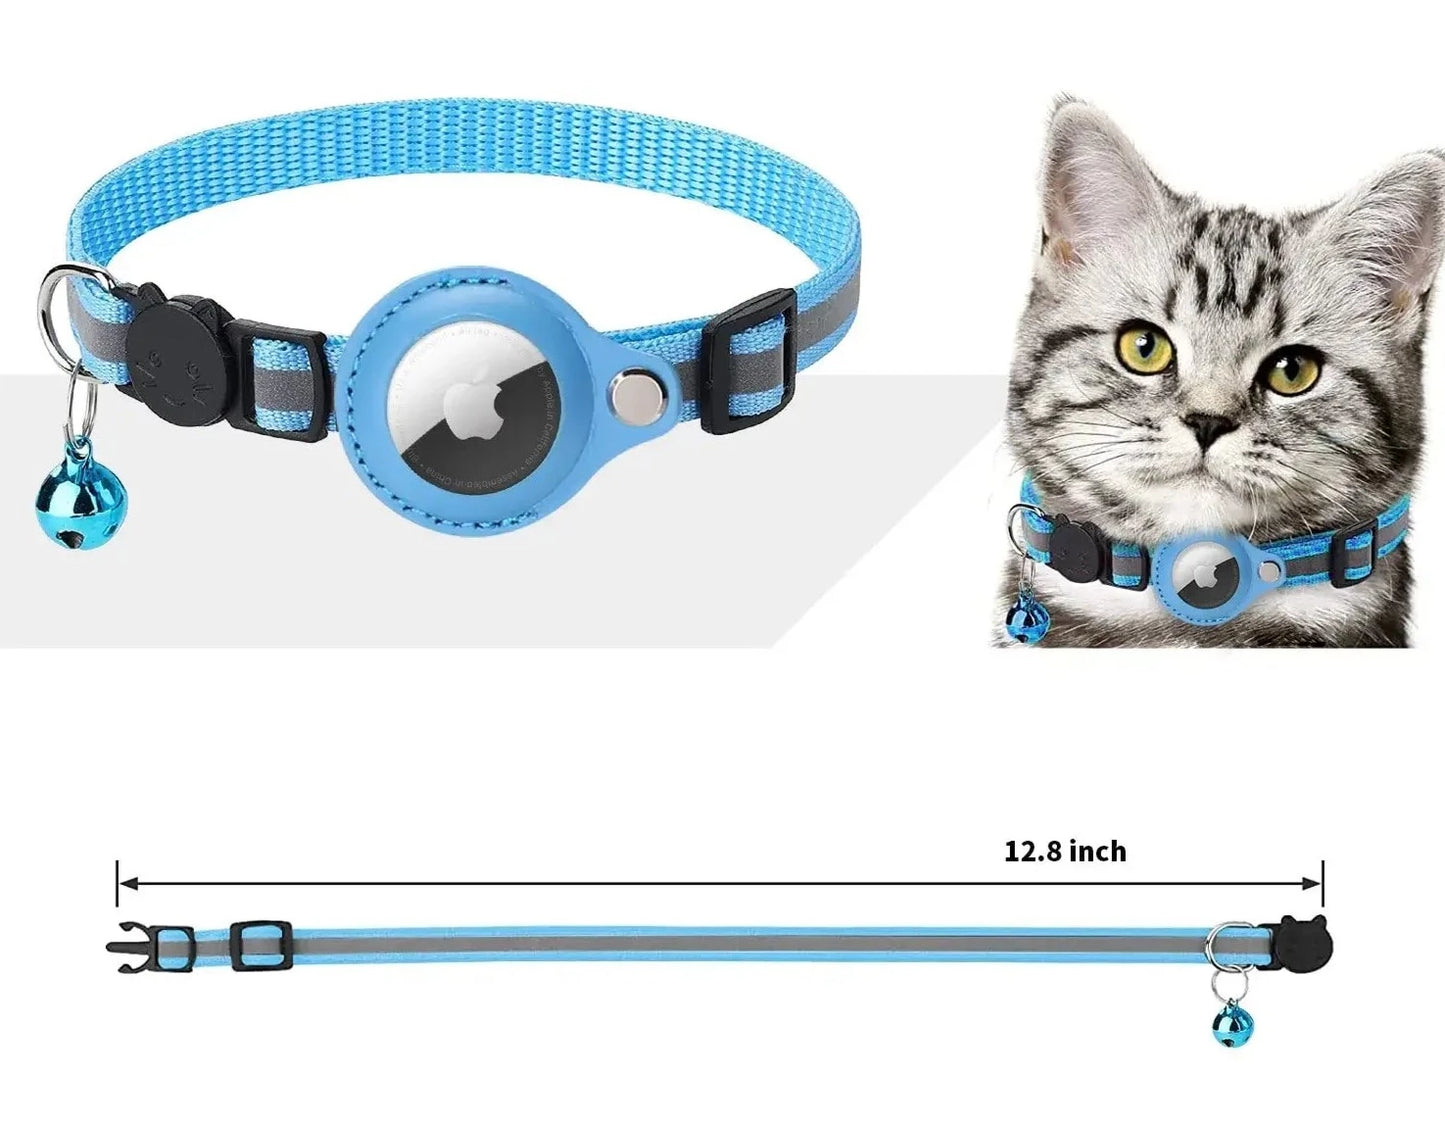 KattenKompas AirHalsband - Kattenhalsband met plaats voor Airtag